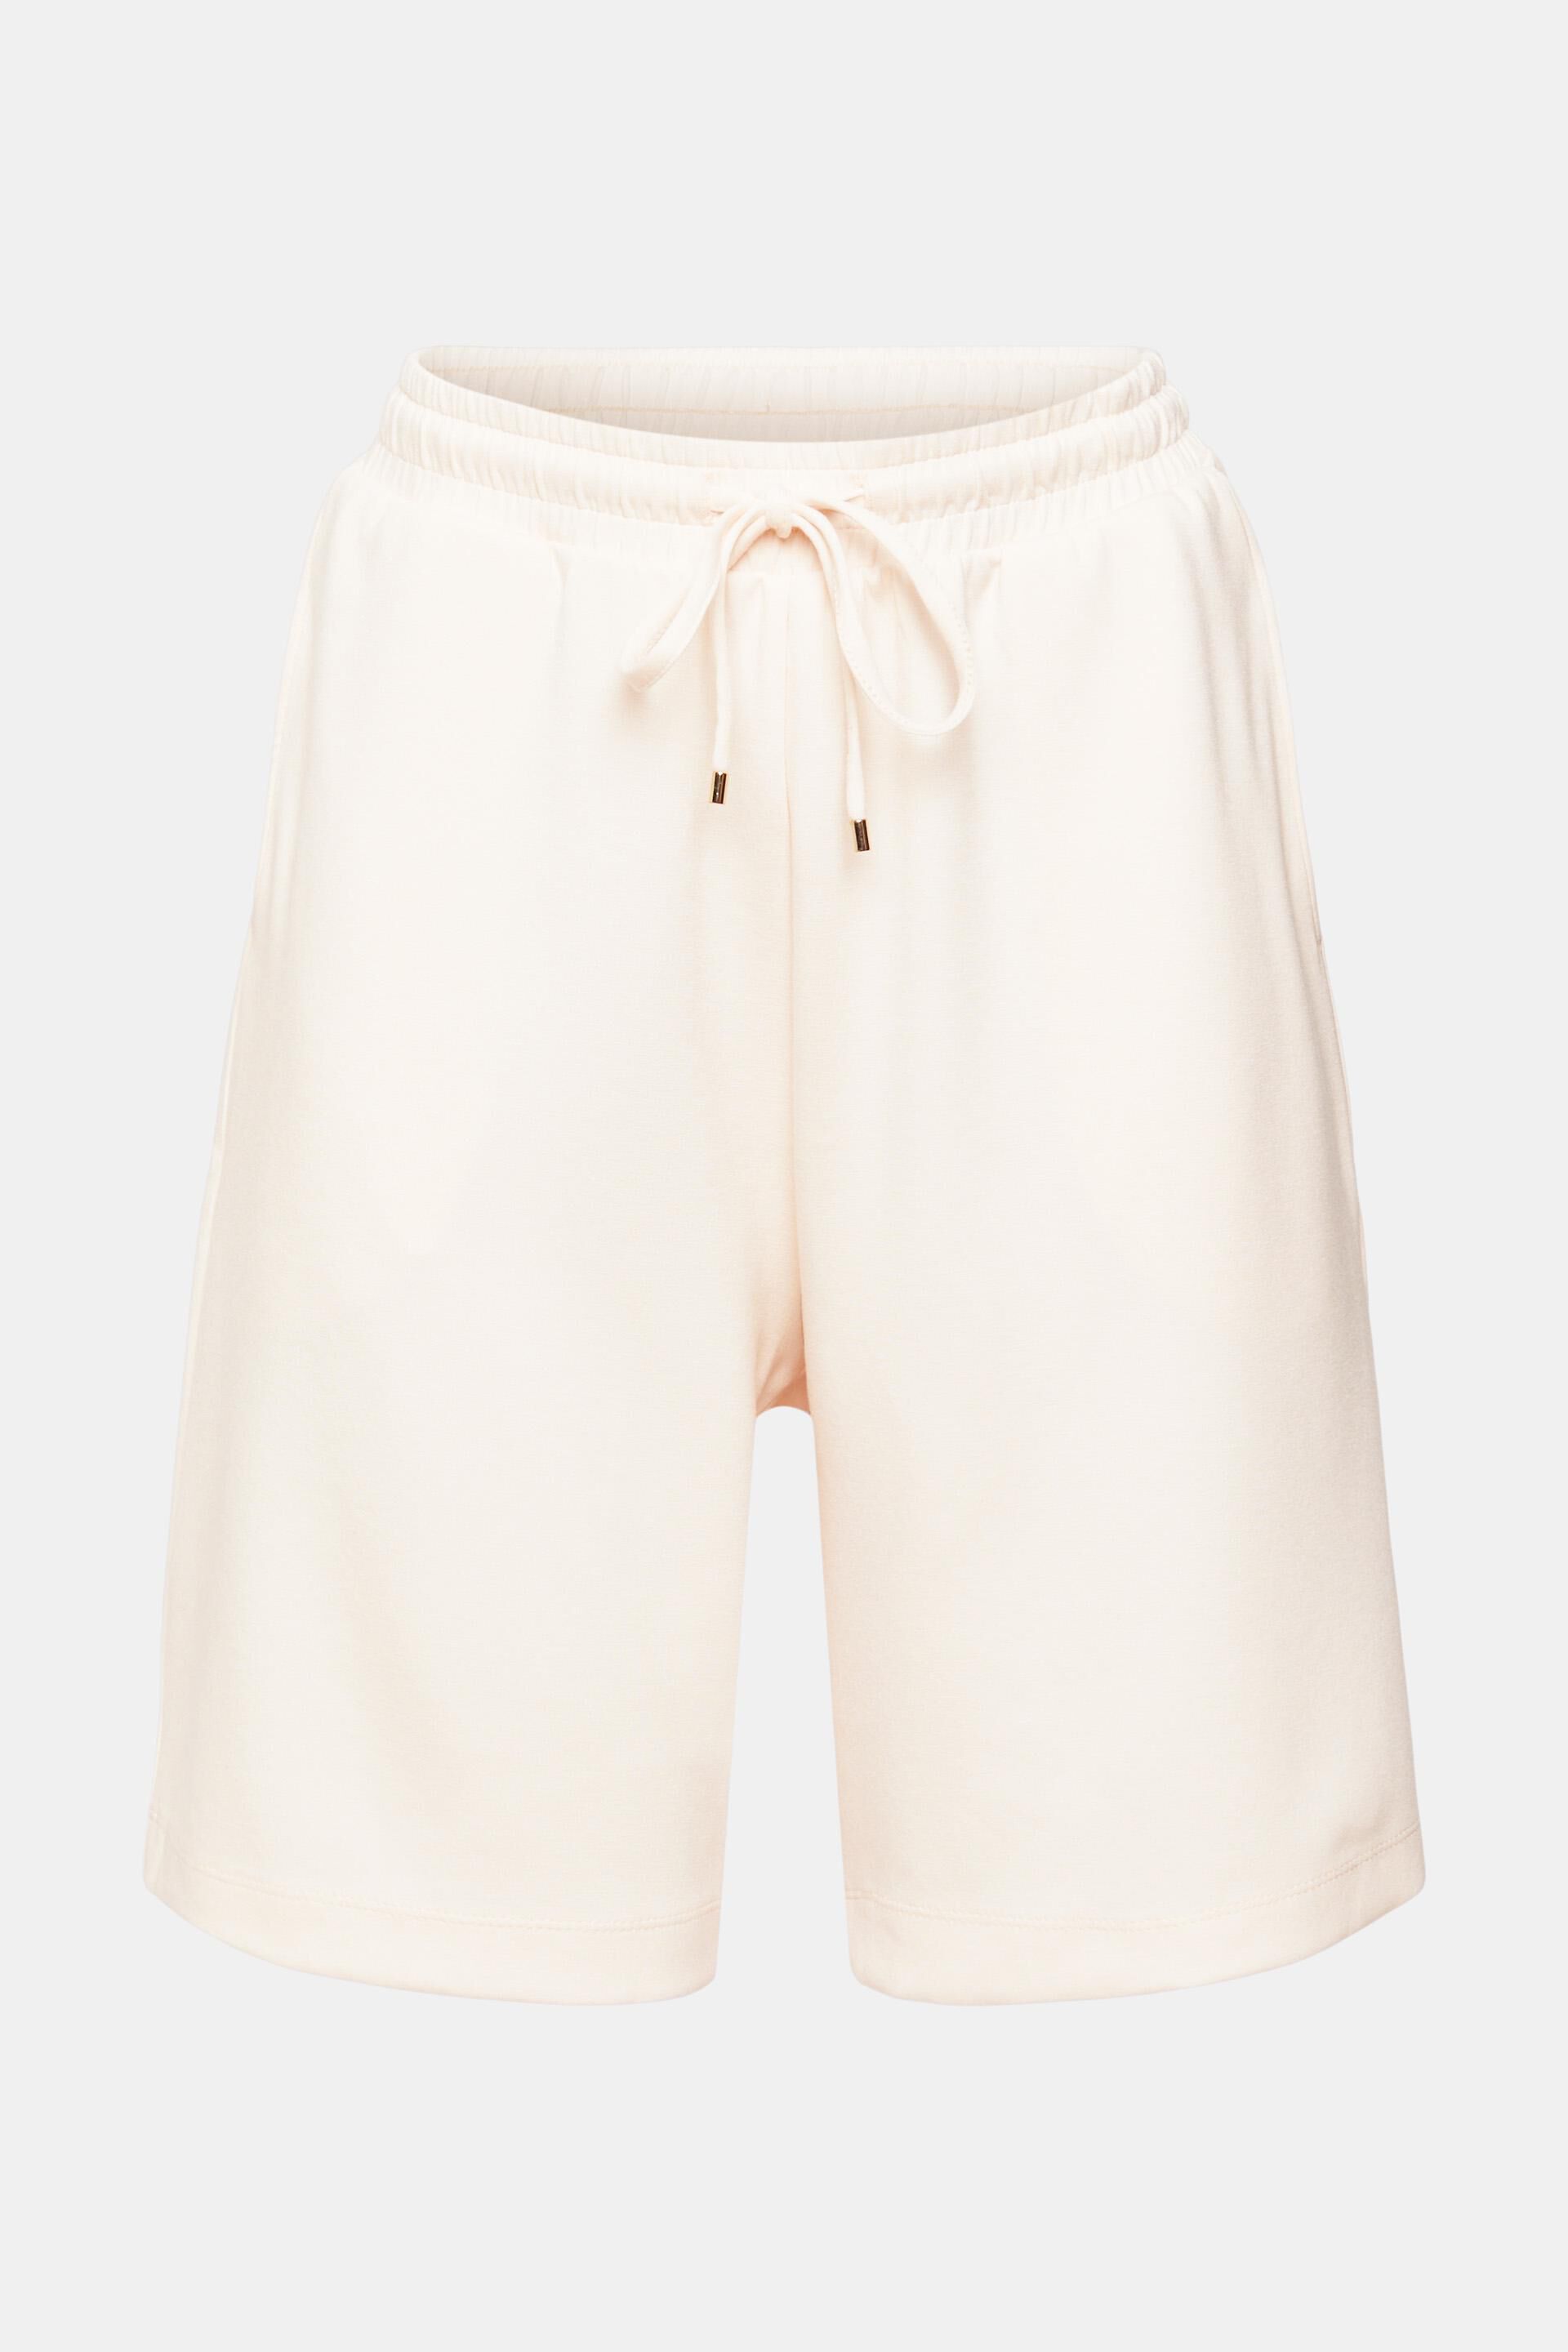 Esmée Damen Bekleidung Kurze Hosen Mini Shorts strand-shorts in Weiß exklusiv 